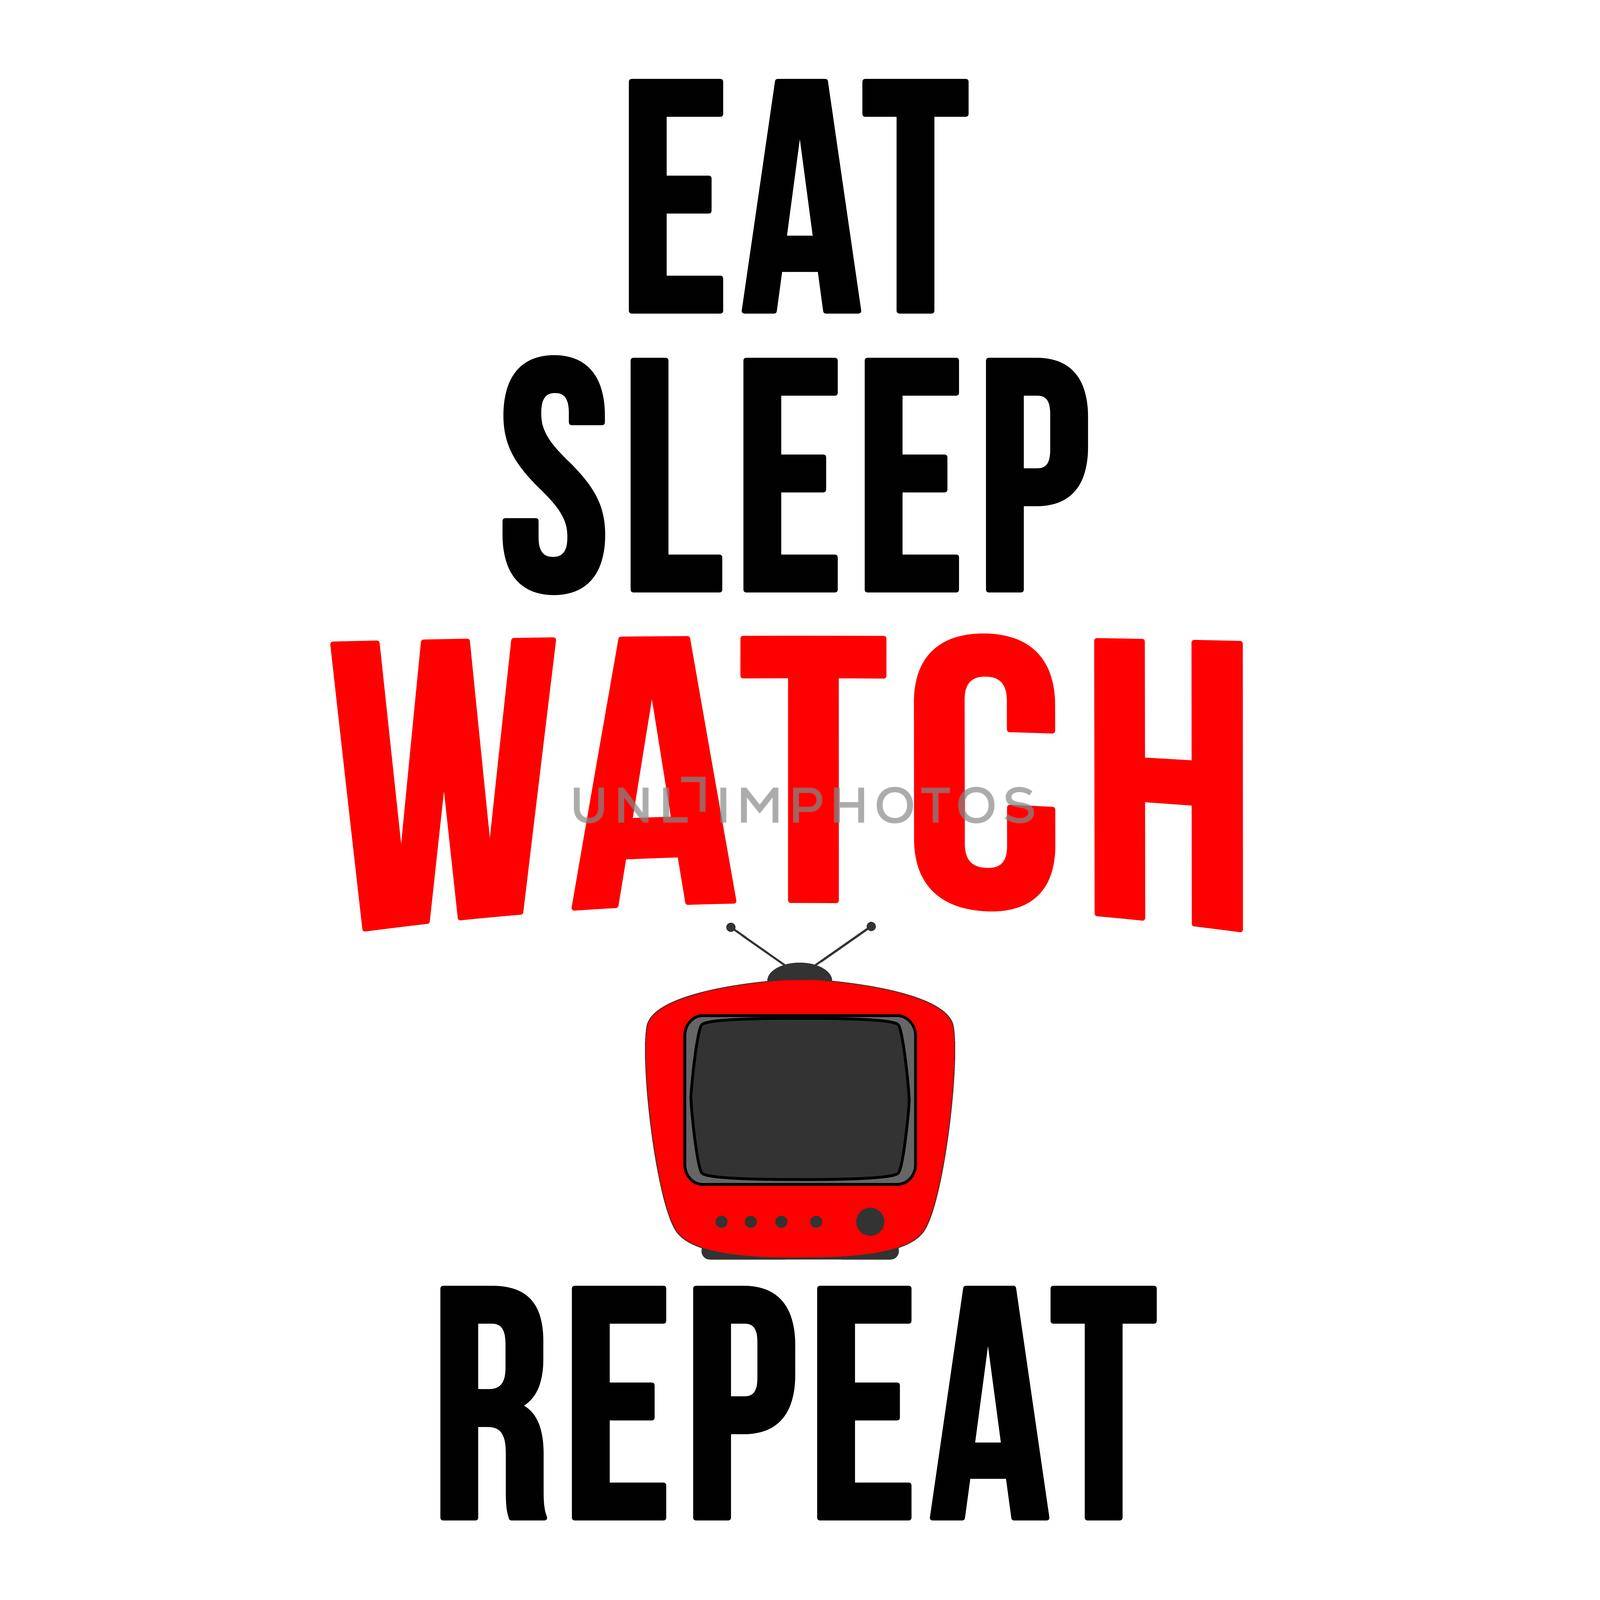 Eat sleep watch tv repeat by Bigalbaloo